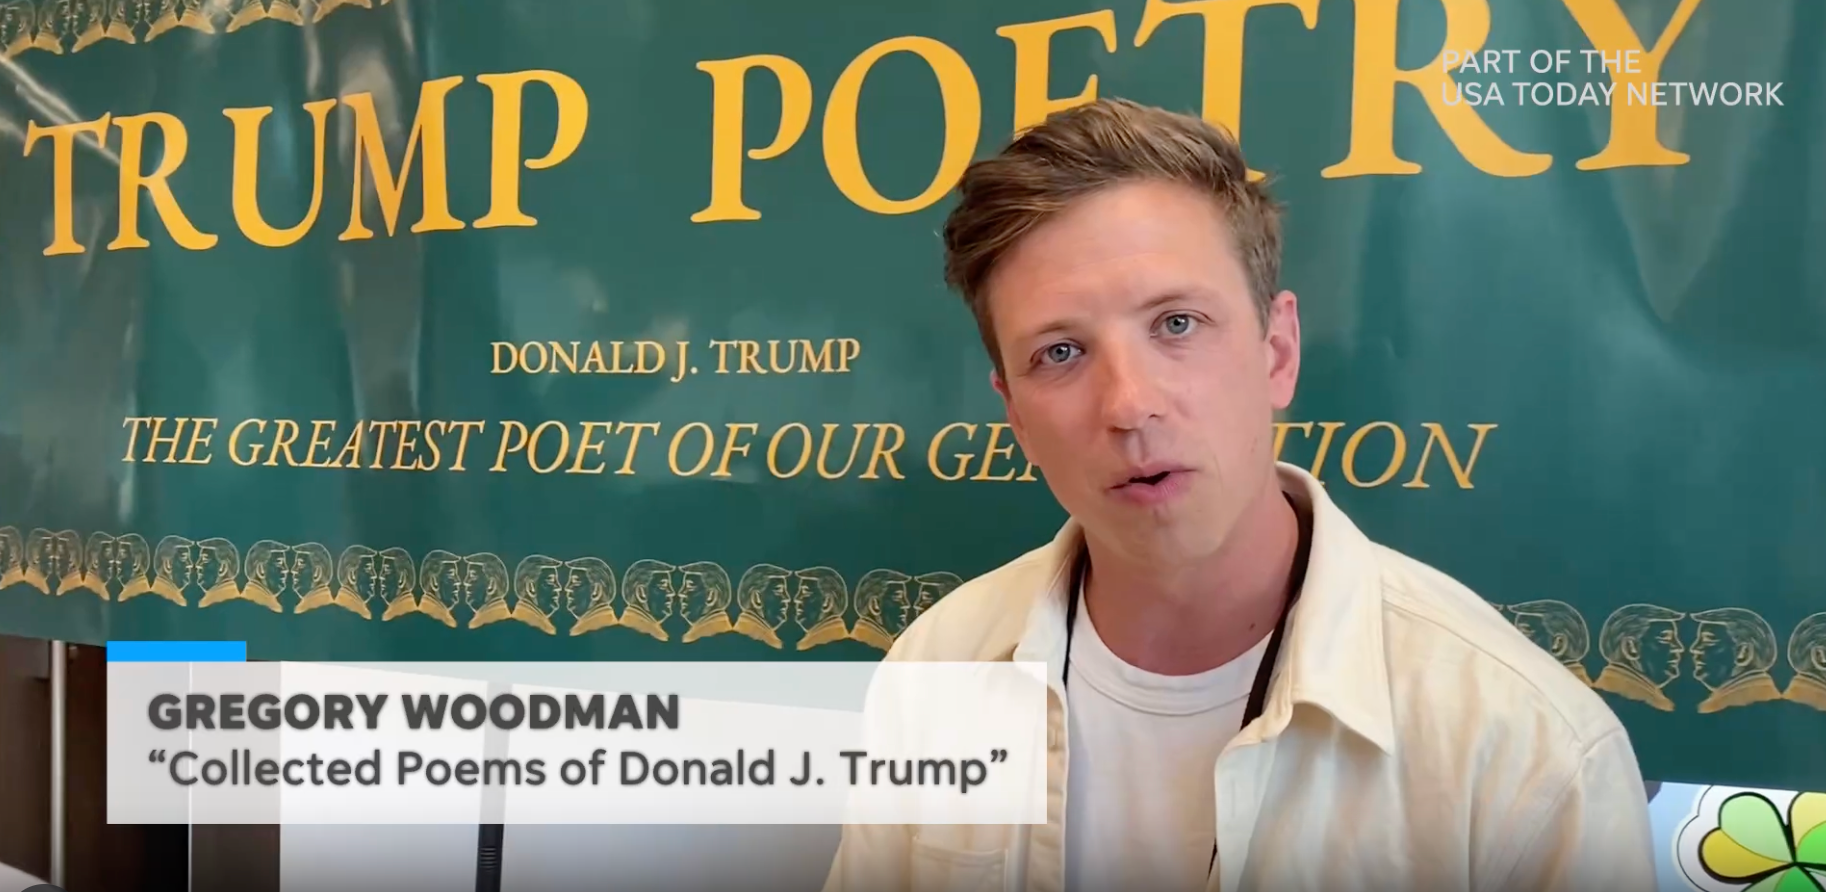 'Actual poetic genius?' Donald Trump's social media posts sold as poetry at GOP convention